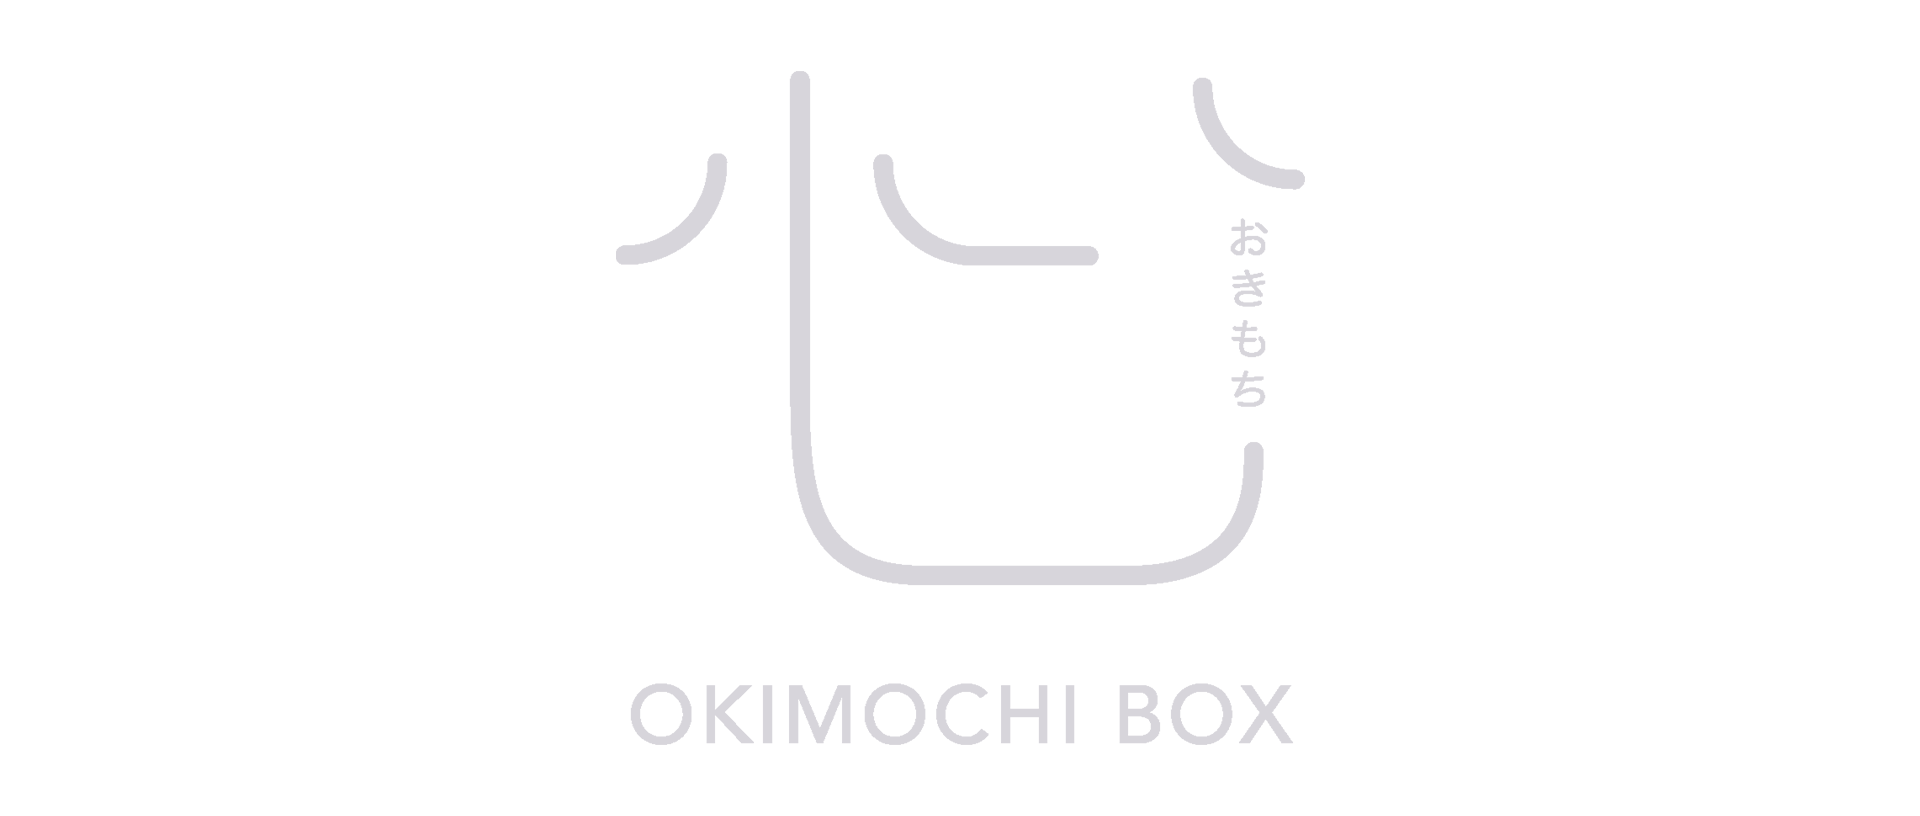 Okimochi 2.35.png